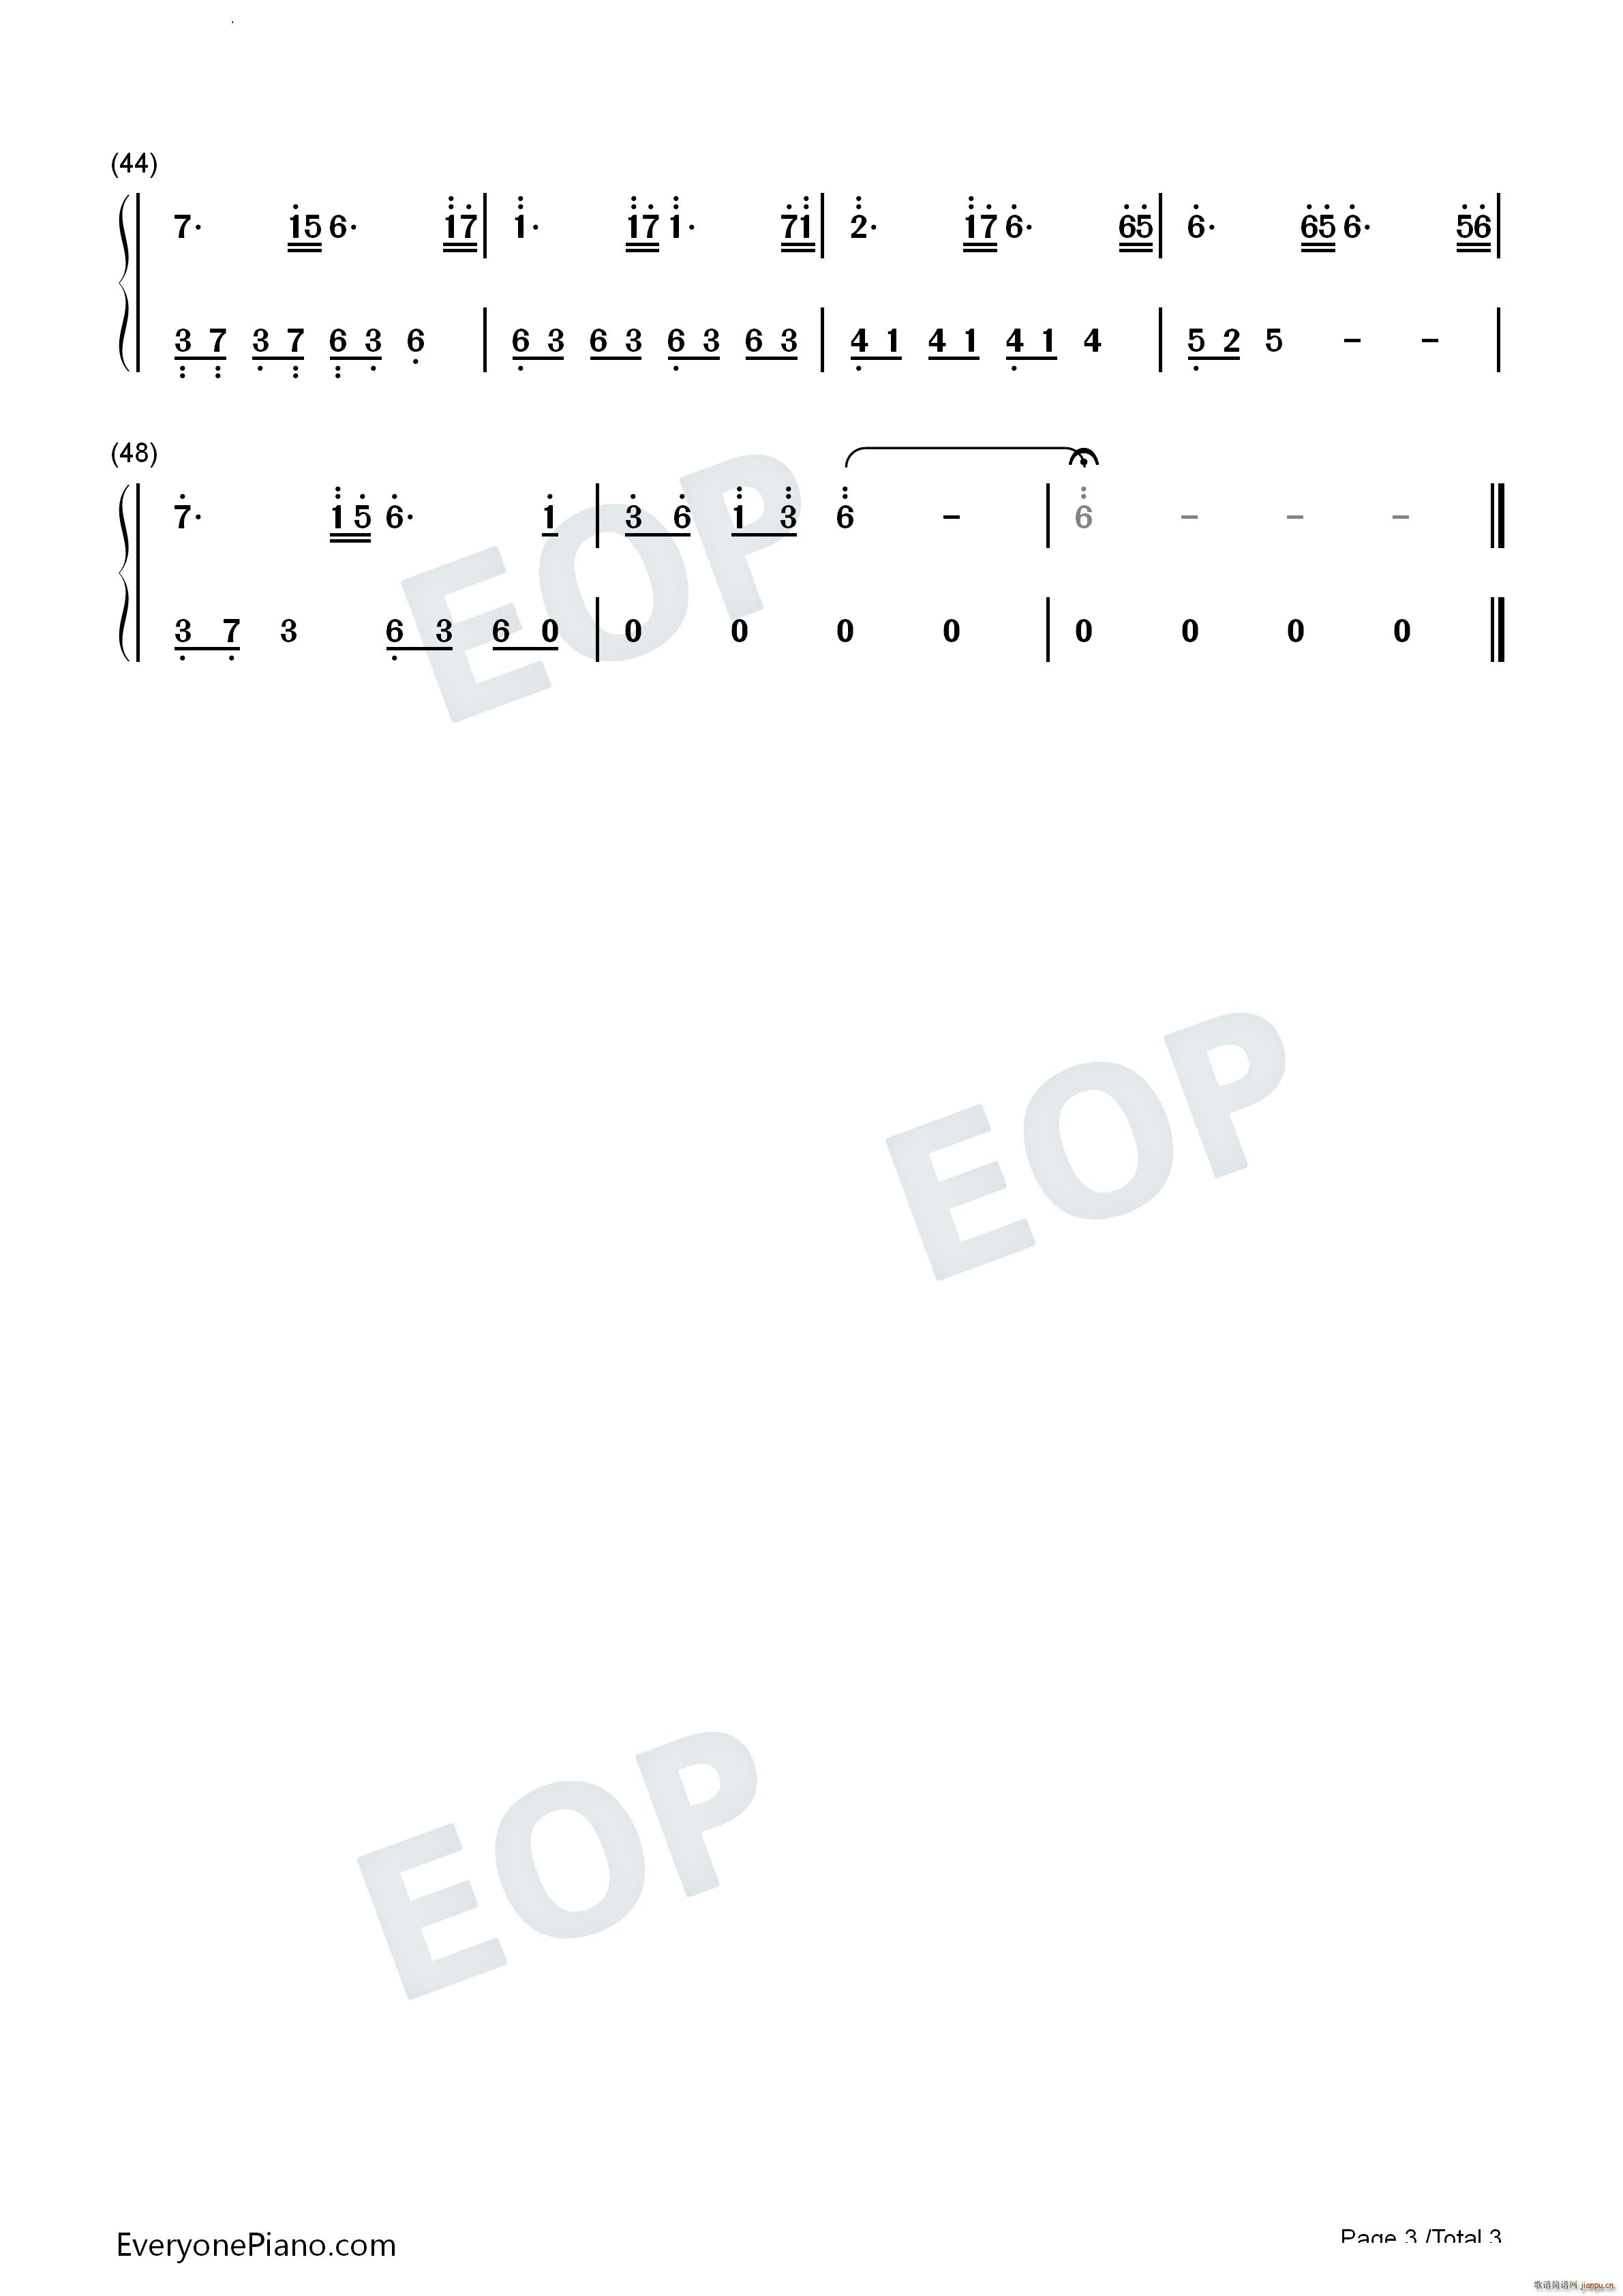 Secunda-上古卷轴5 天际五线谱预览-EOP在线乐谱架